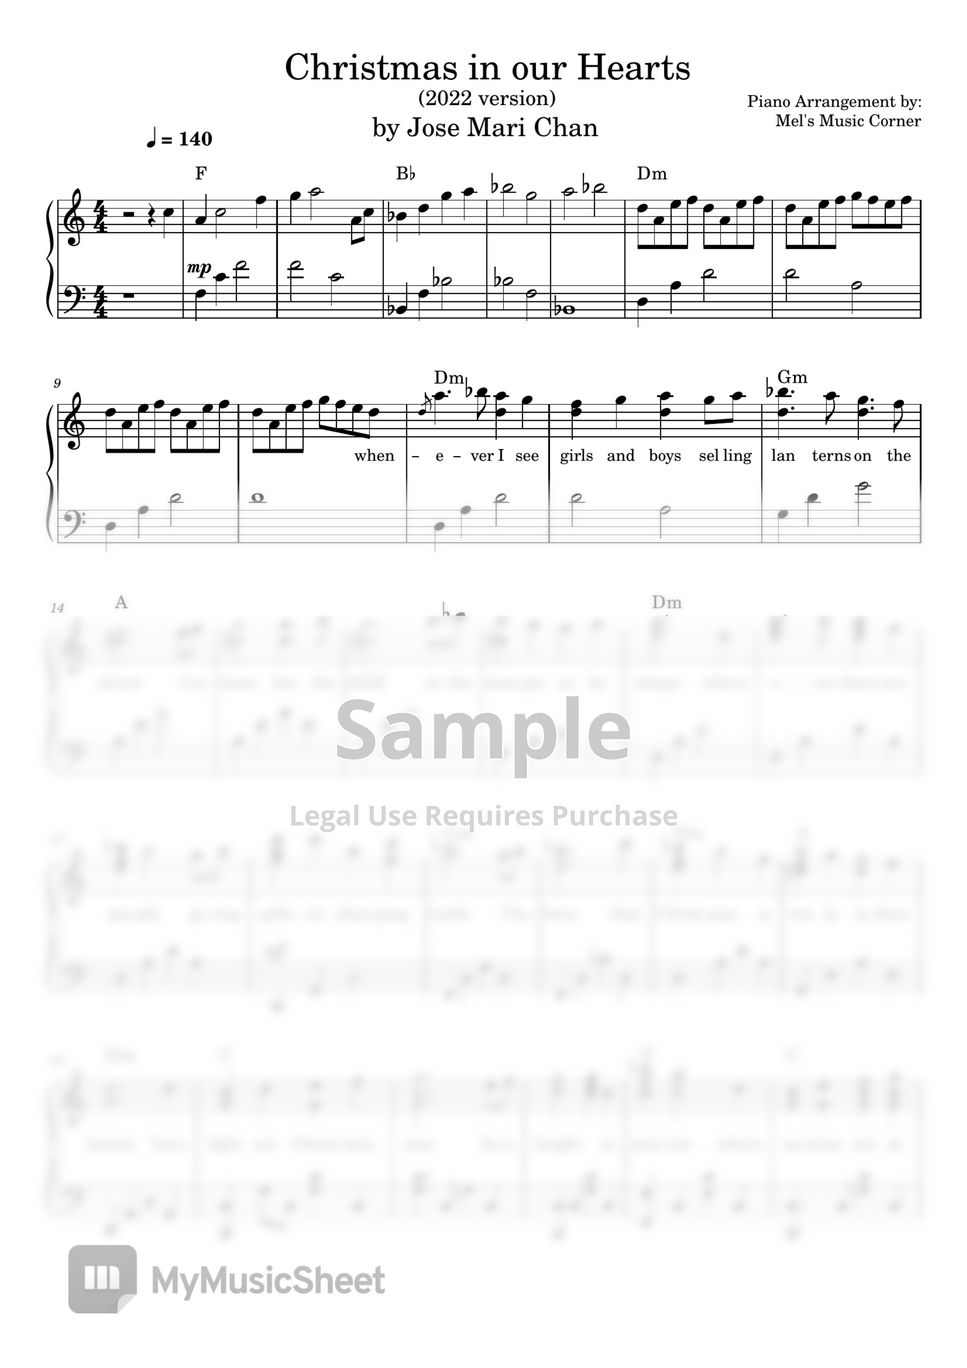 Jose Mari Chan - Christmas in Our Hearts (piano sheet music) Sheets by ...